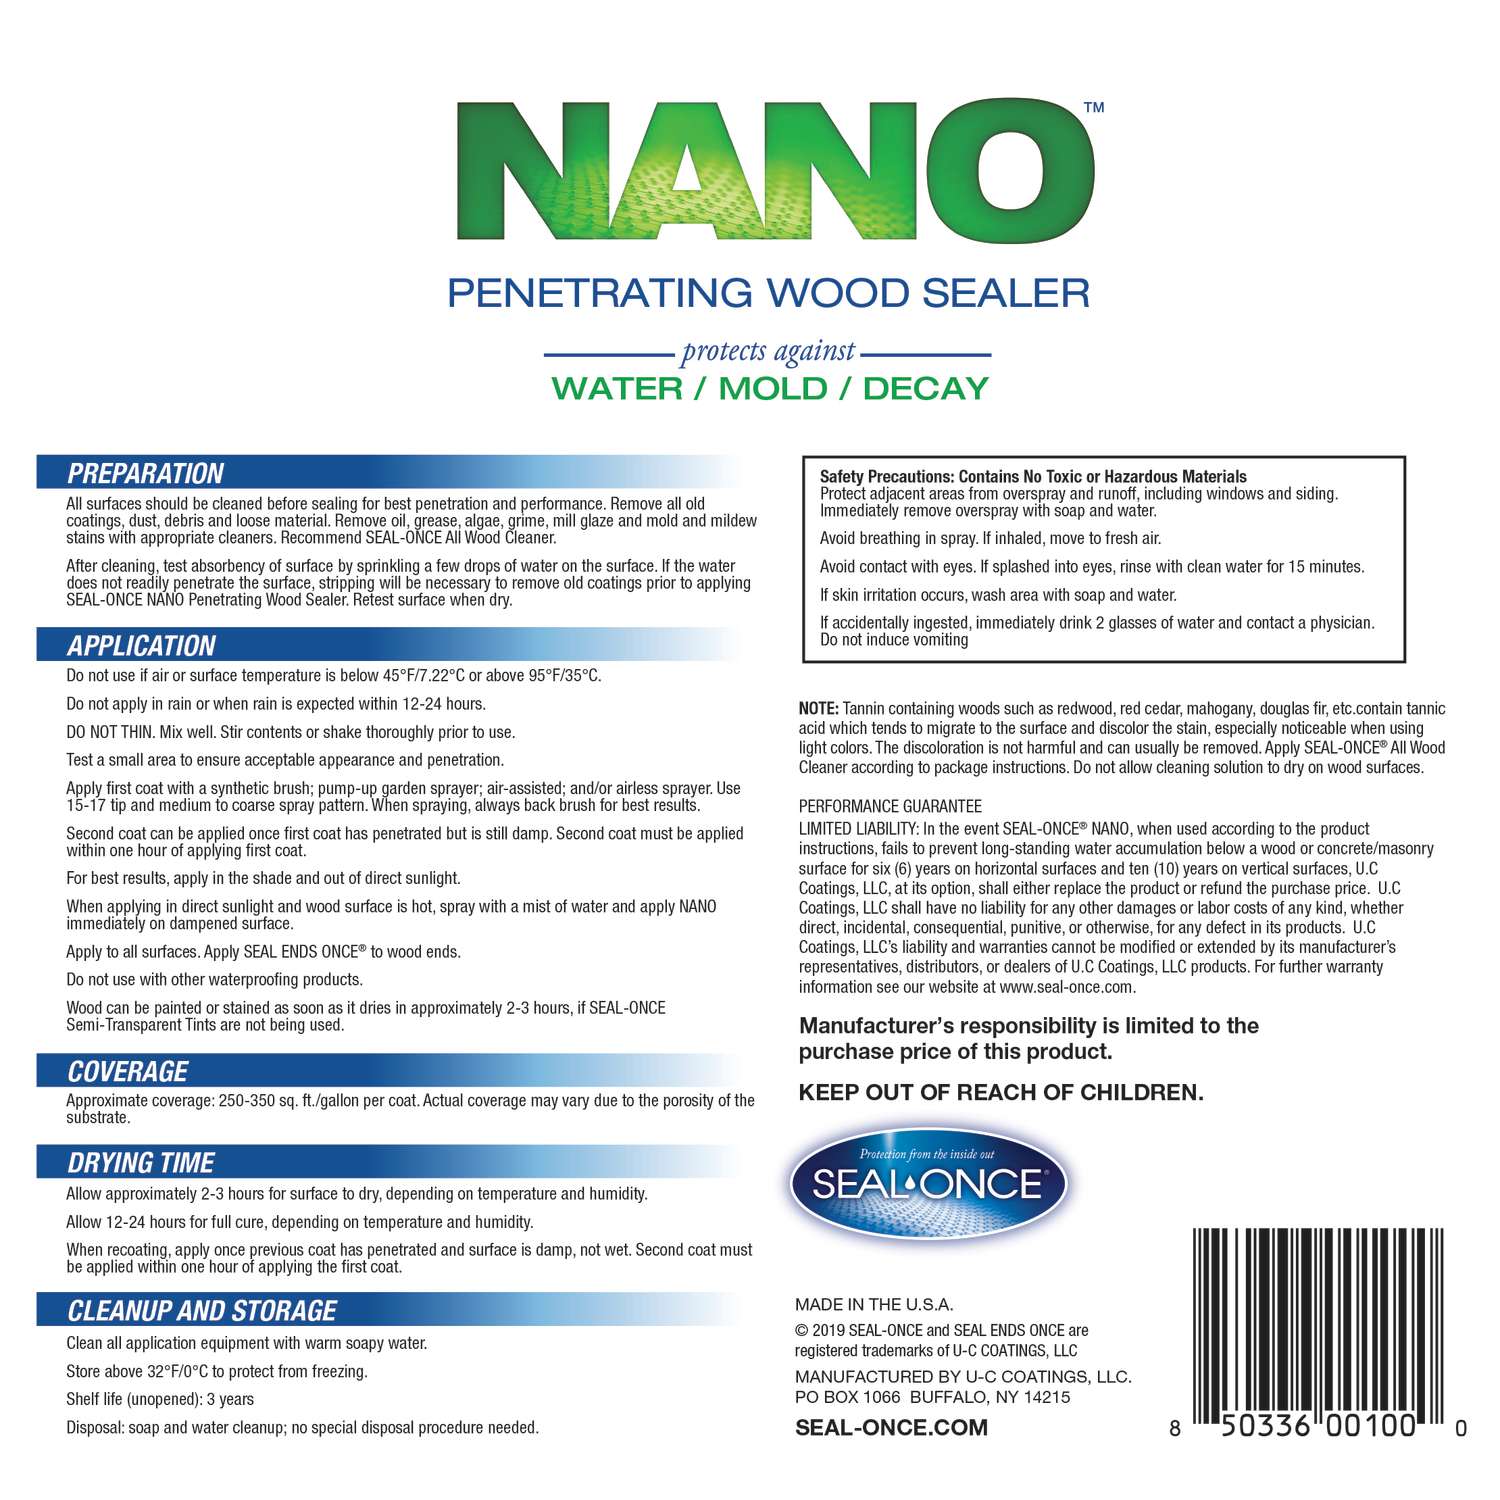 Seal-once Nano+Poly Premium Wood Sealer in Black, Size: 1 Gal